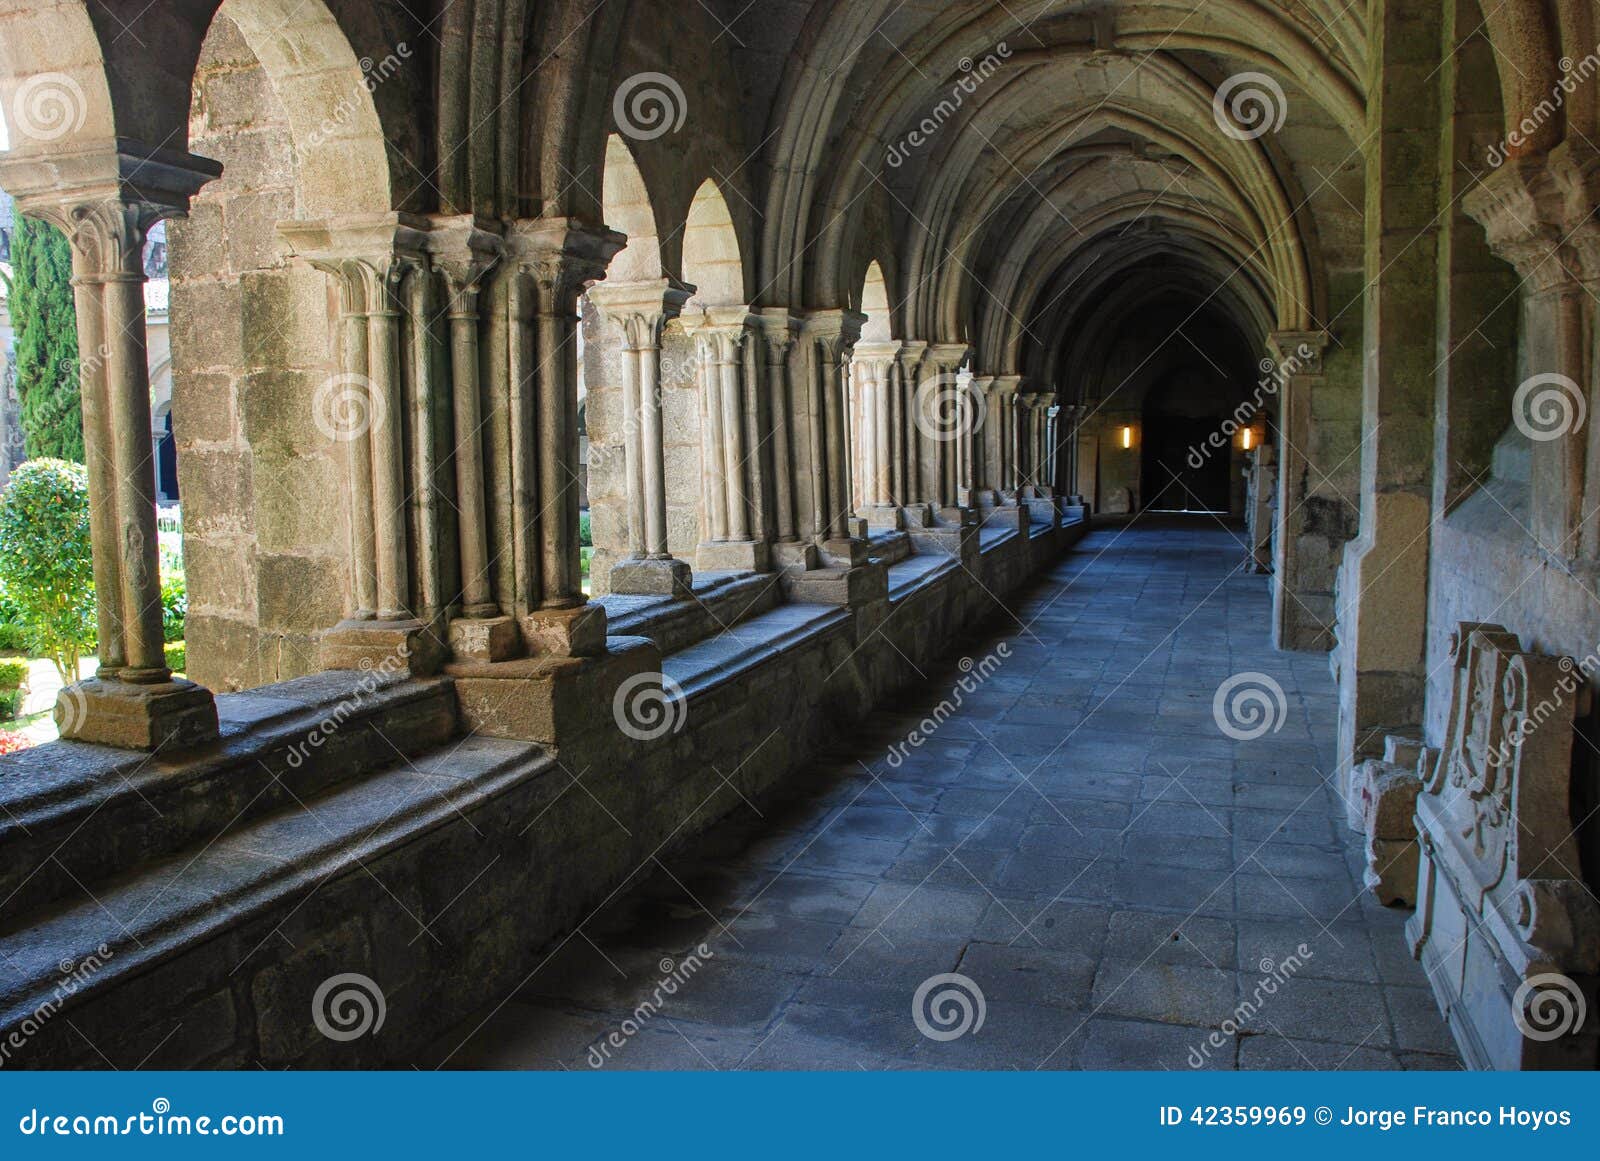 gothic cloister